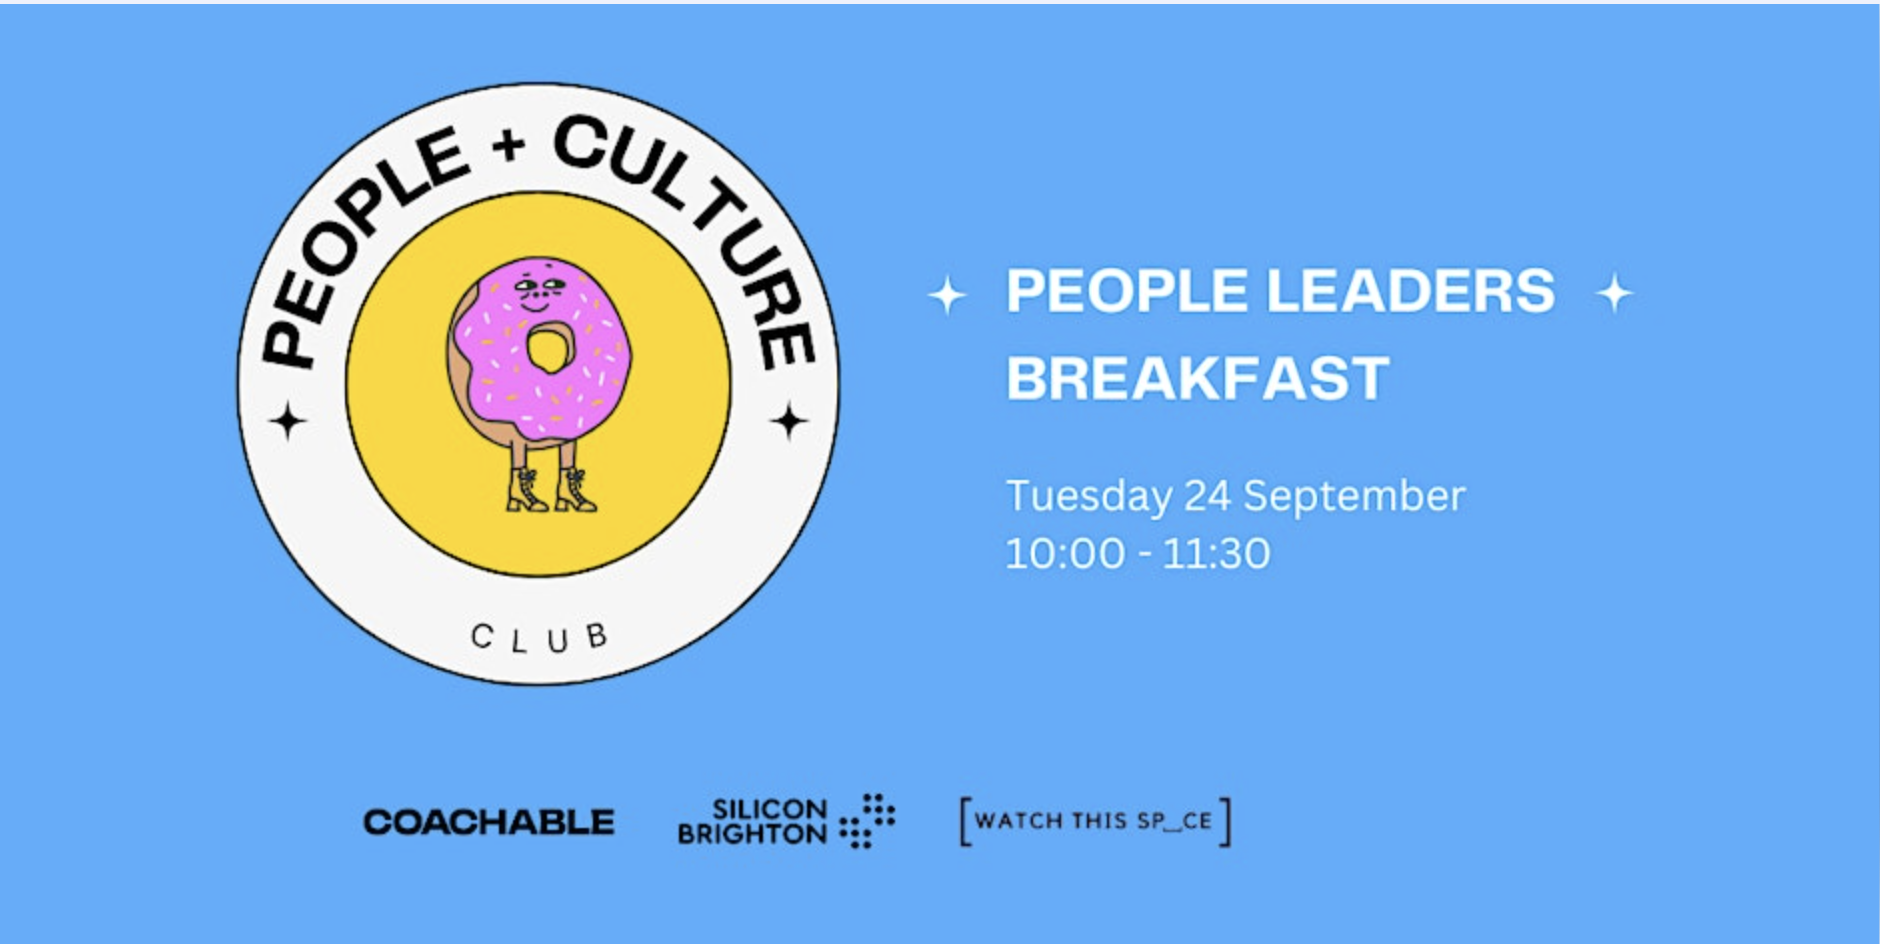 People + Culture Club: Pop Up Breakfast